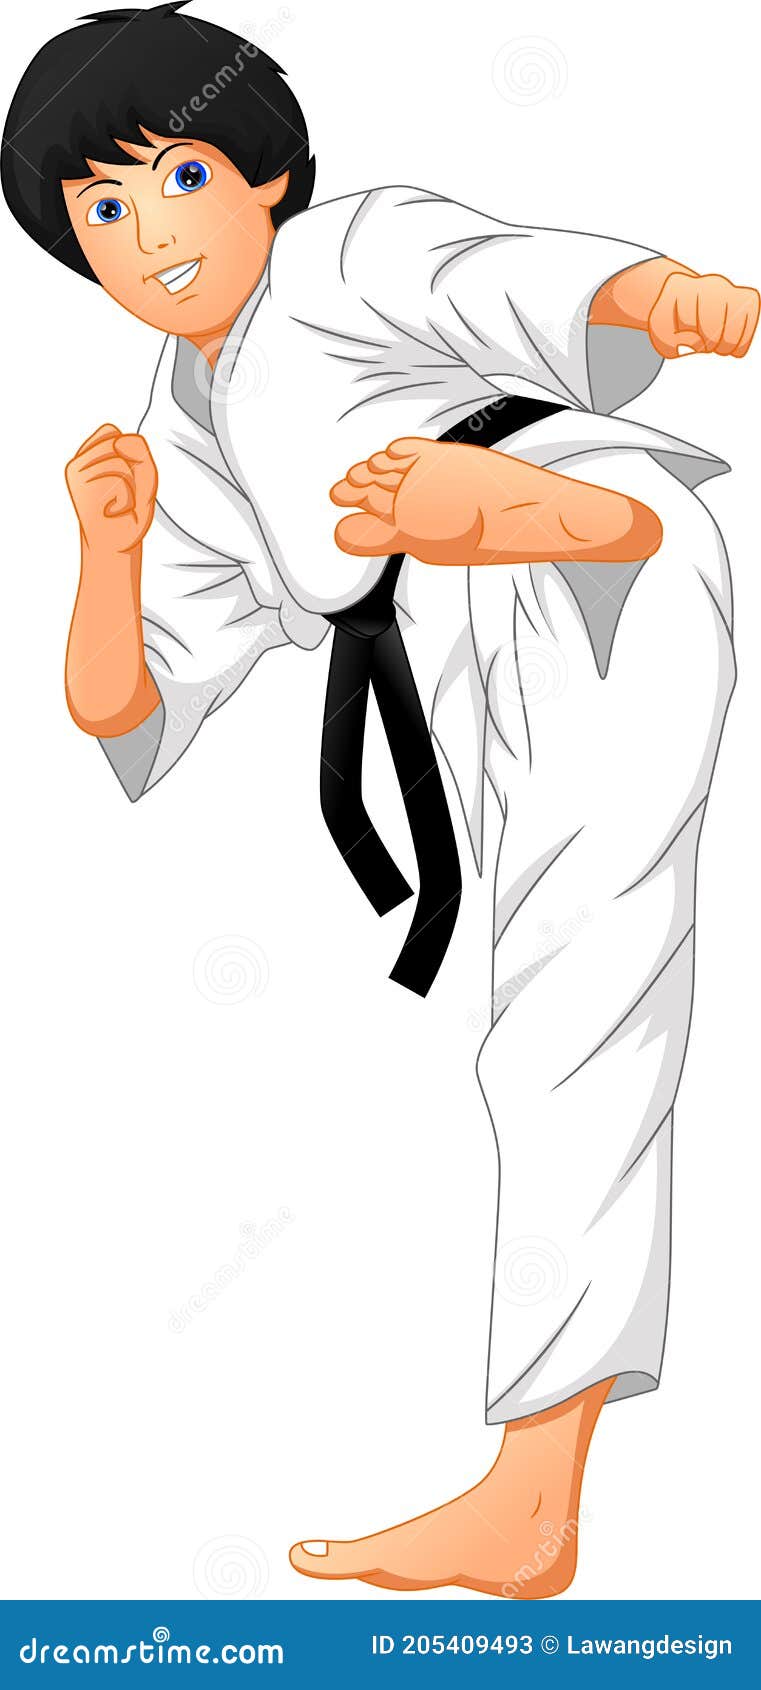 Karate boy cartoon stock vector. Illustration of kungfu - 205409493